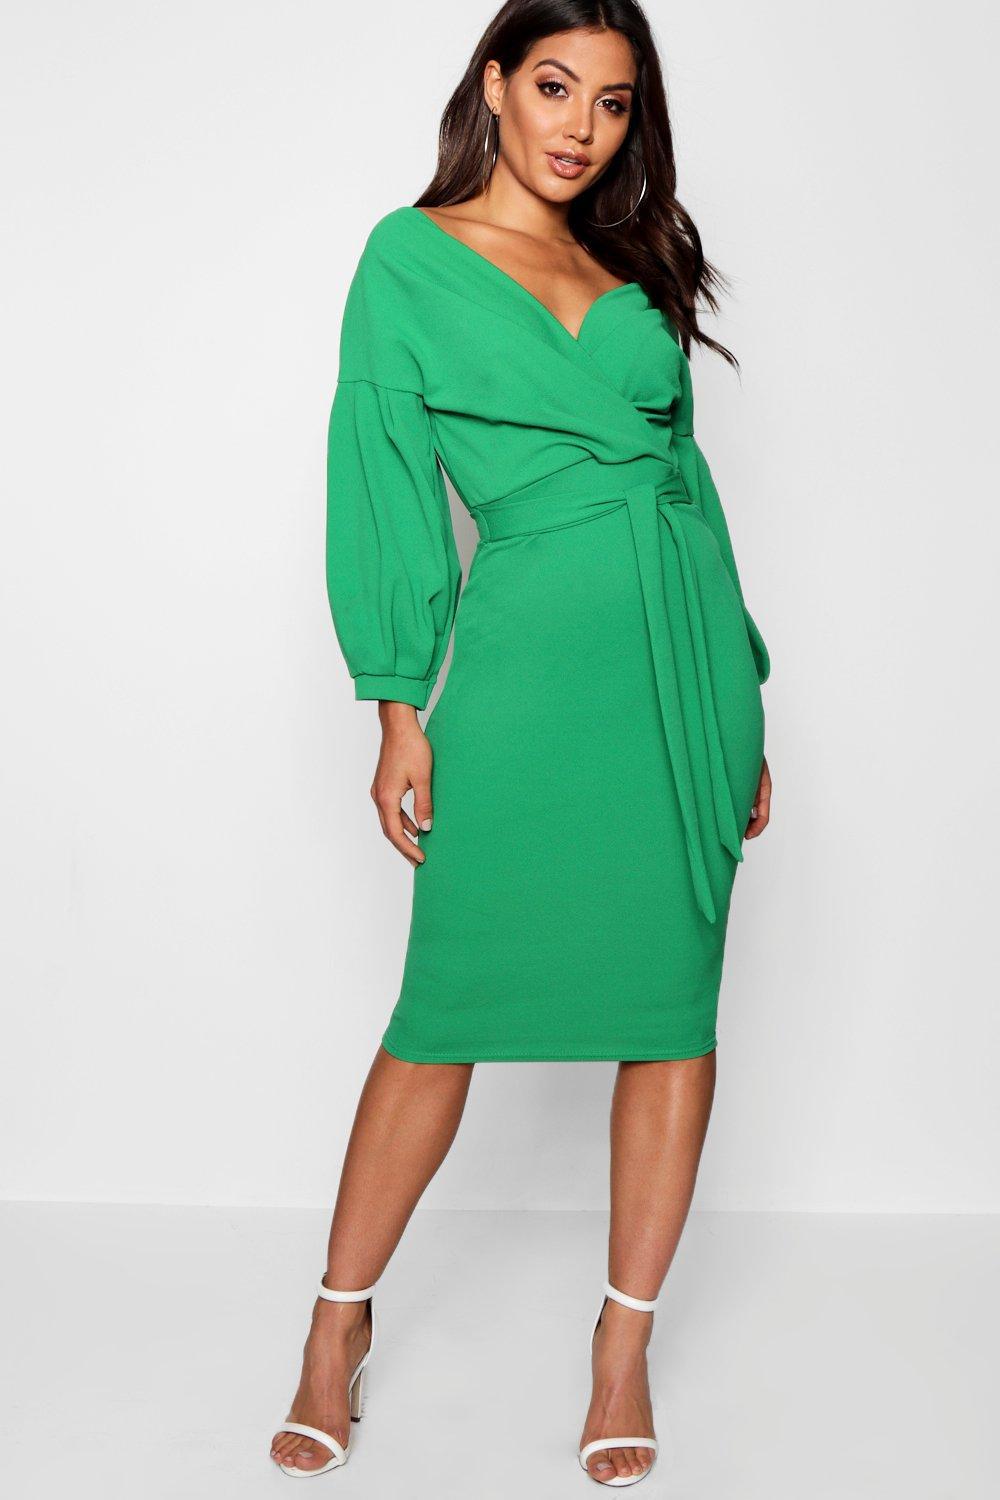 Lyst - Boohoo Off The Shoulder Wrap Midi Dress in Green